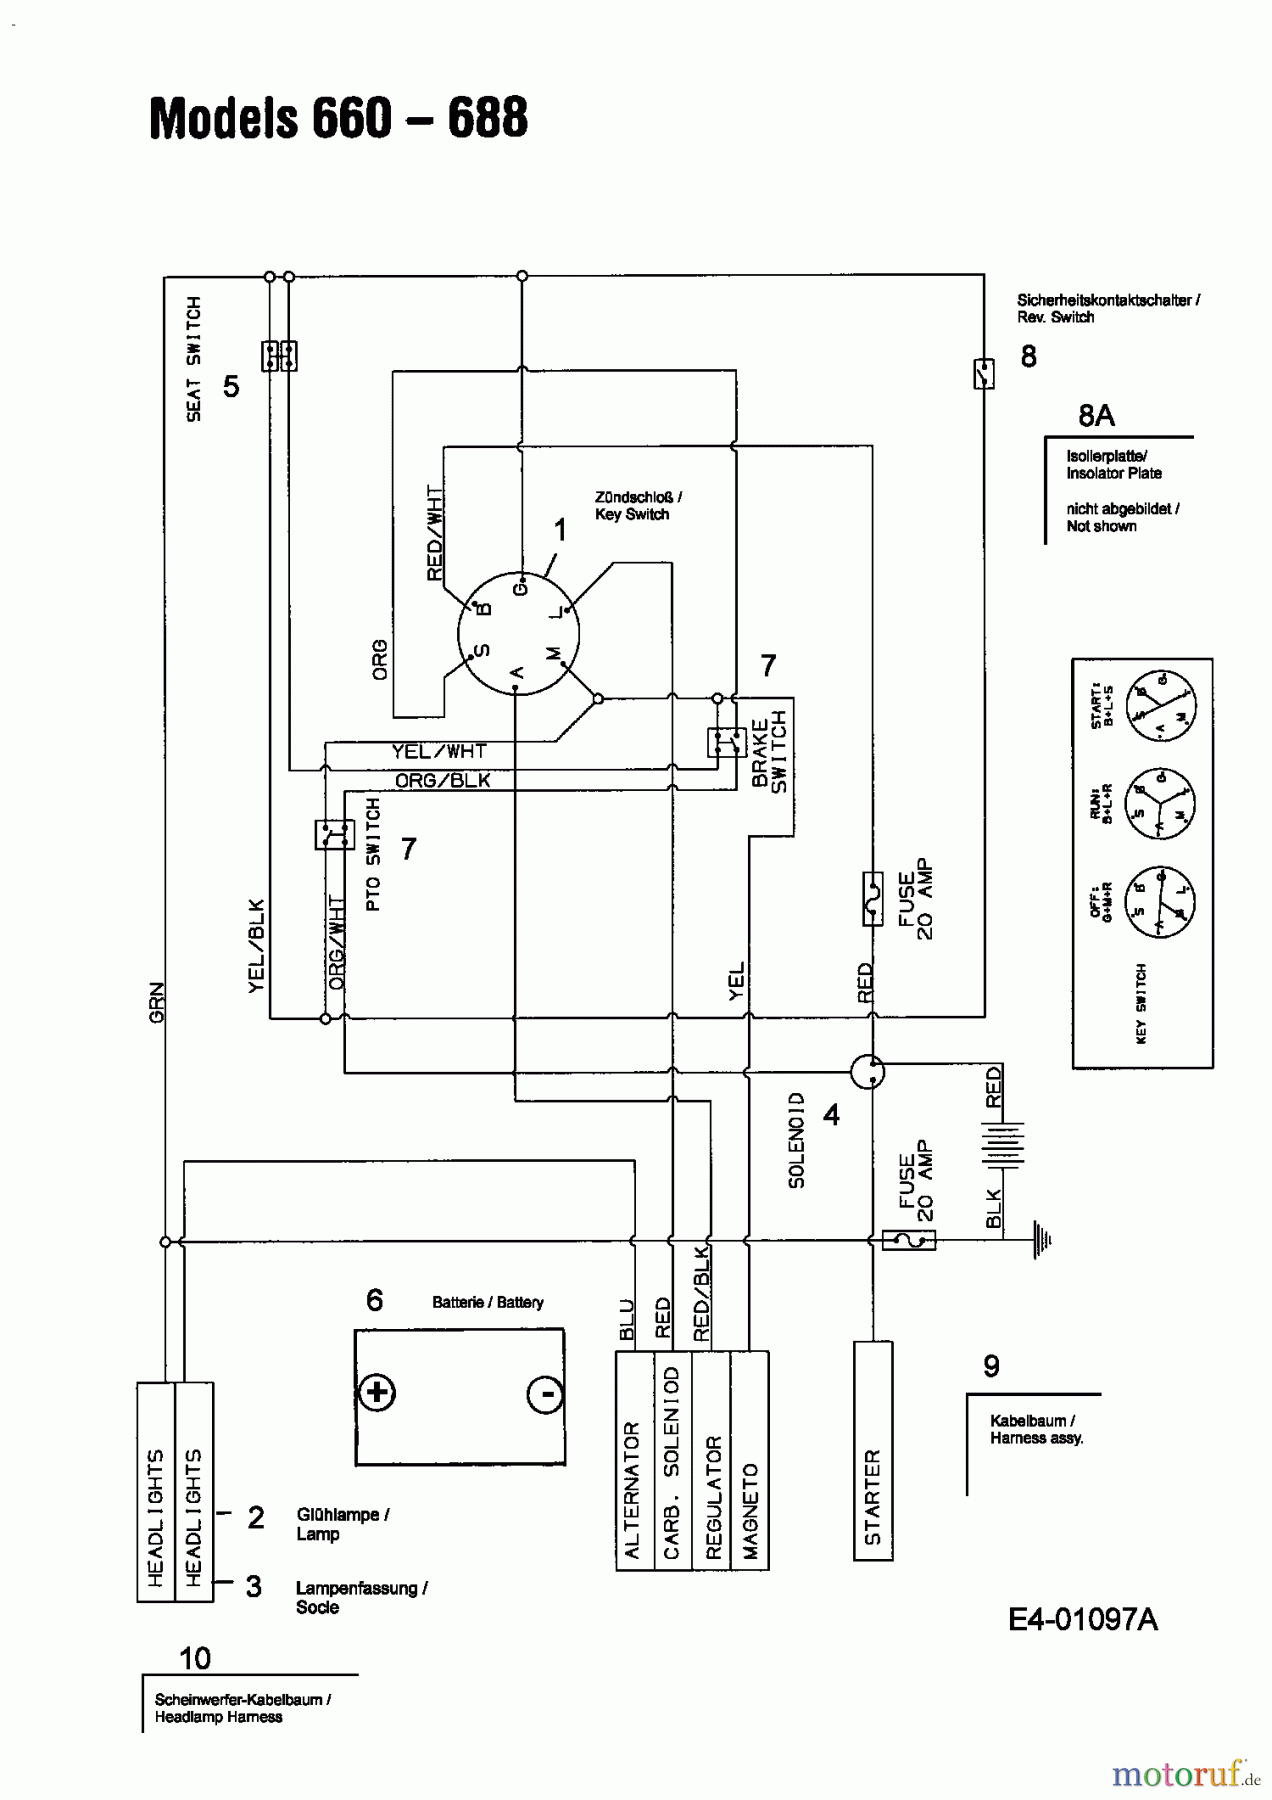  MTD Lawn tractors RS 115/96 13A1662F600  (2004) Wiring diagram